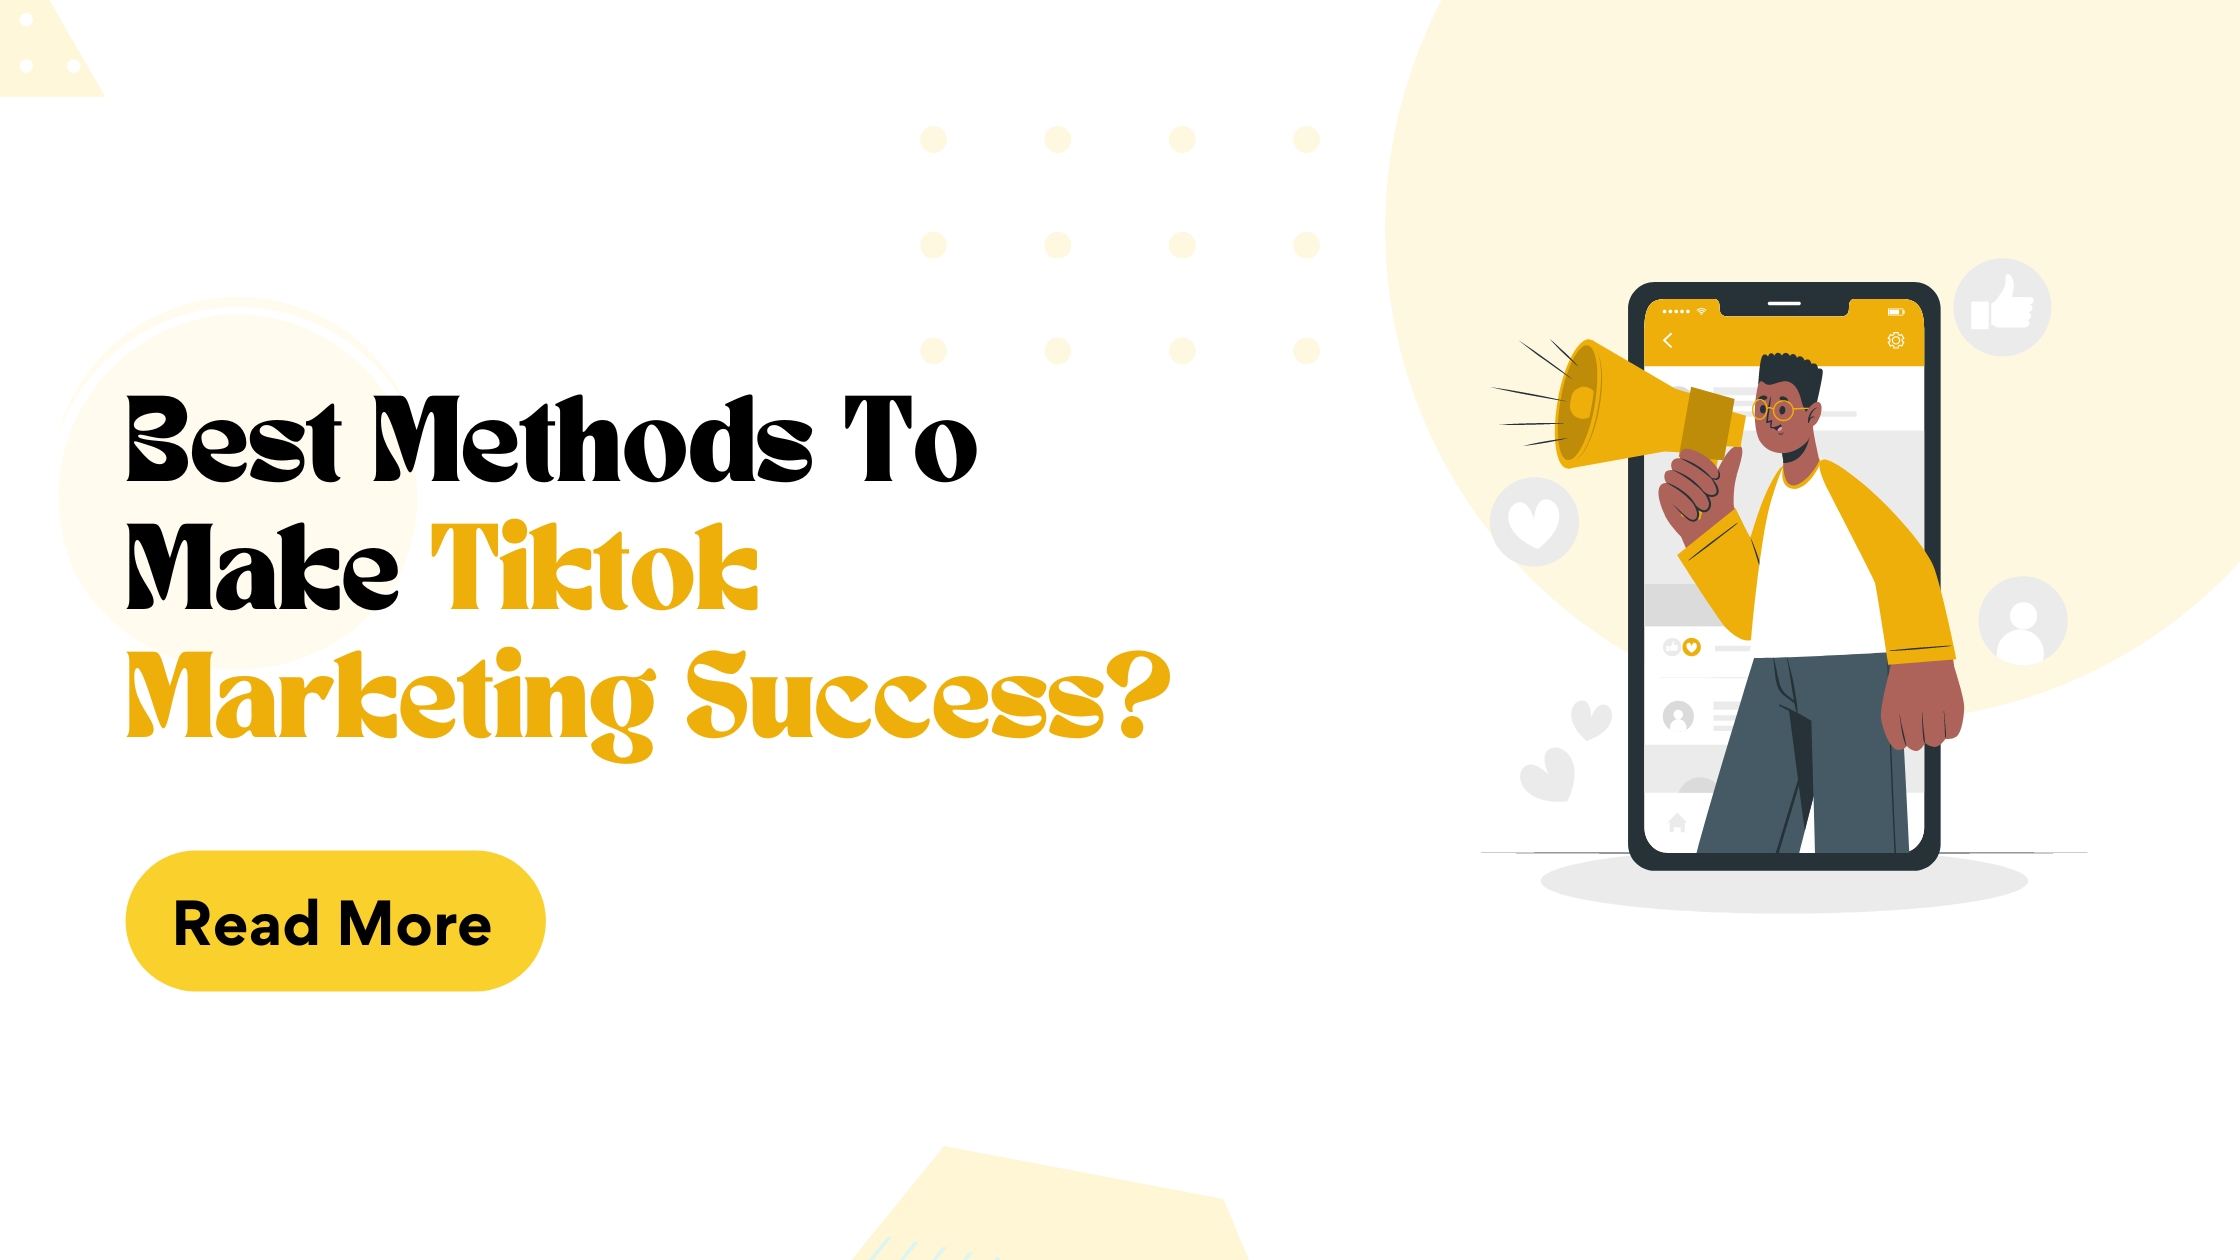 Best Methods To Make Tiktok Your Marketing Success?